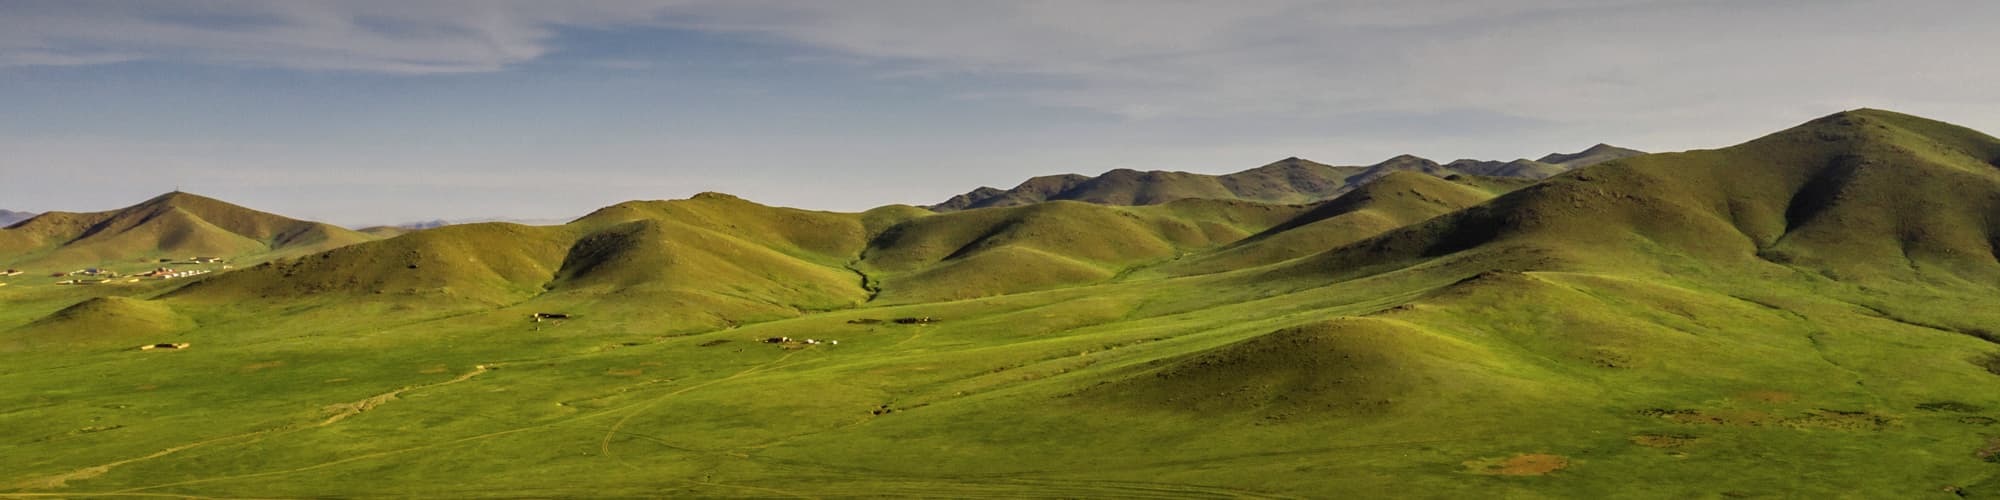 Randonnée Mongolie © Travel Stock / Adobe Stock